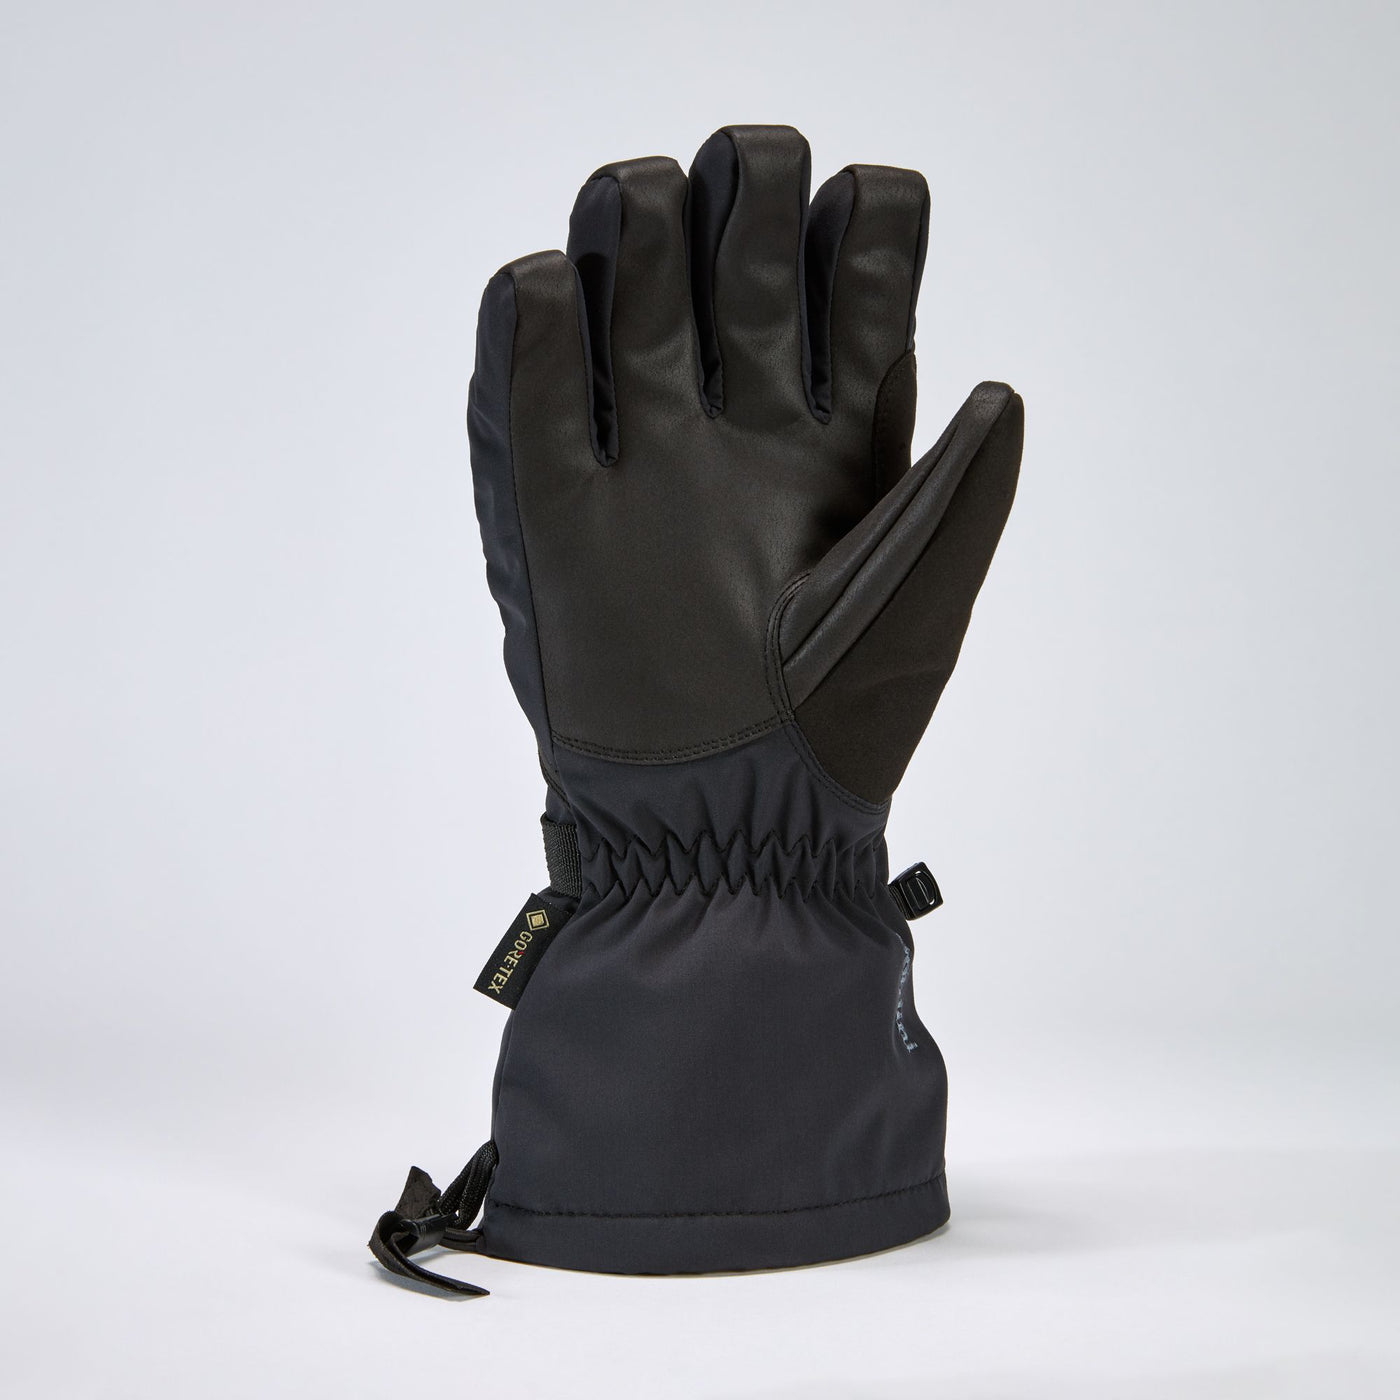 Men's Forge Heated Glove